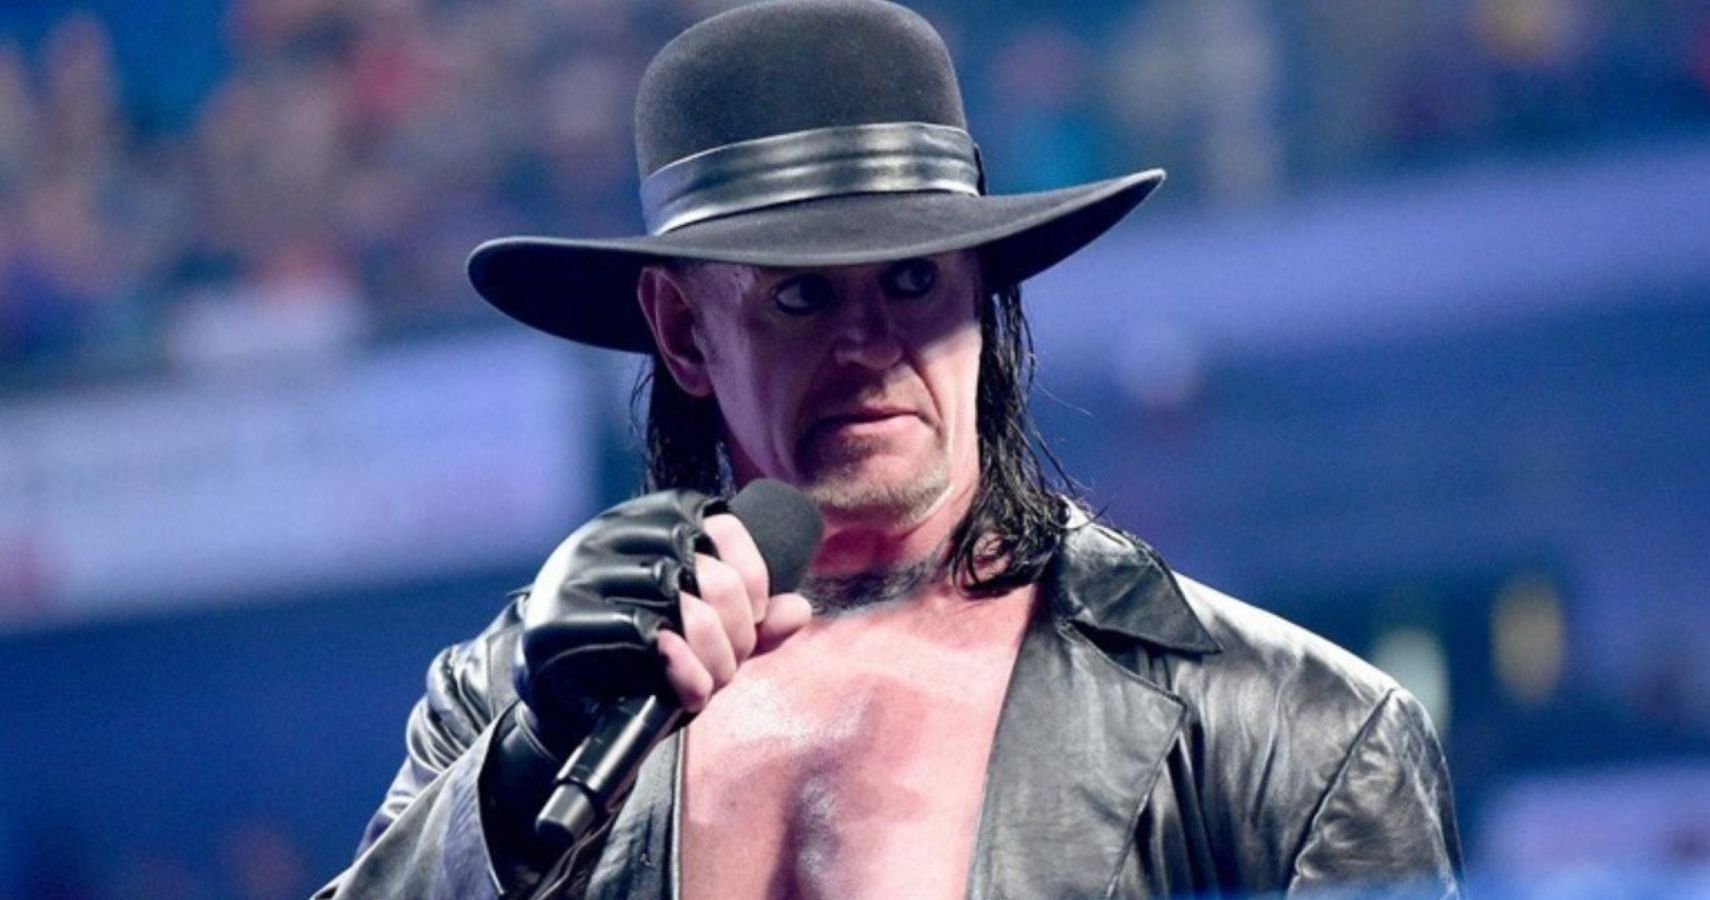 The Undertaker retired last year